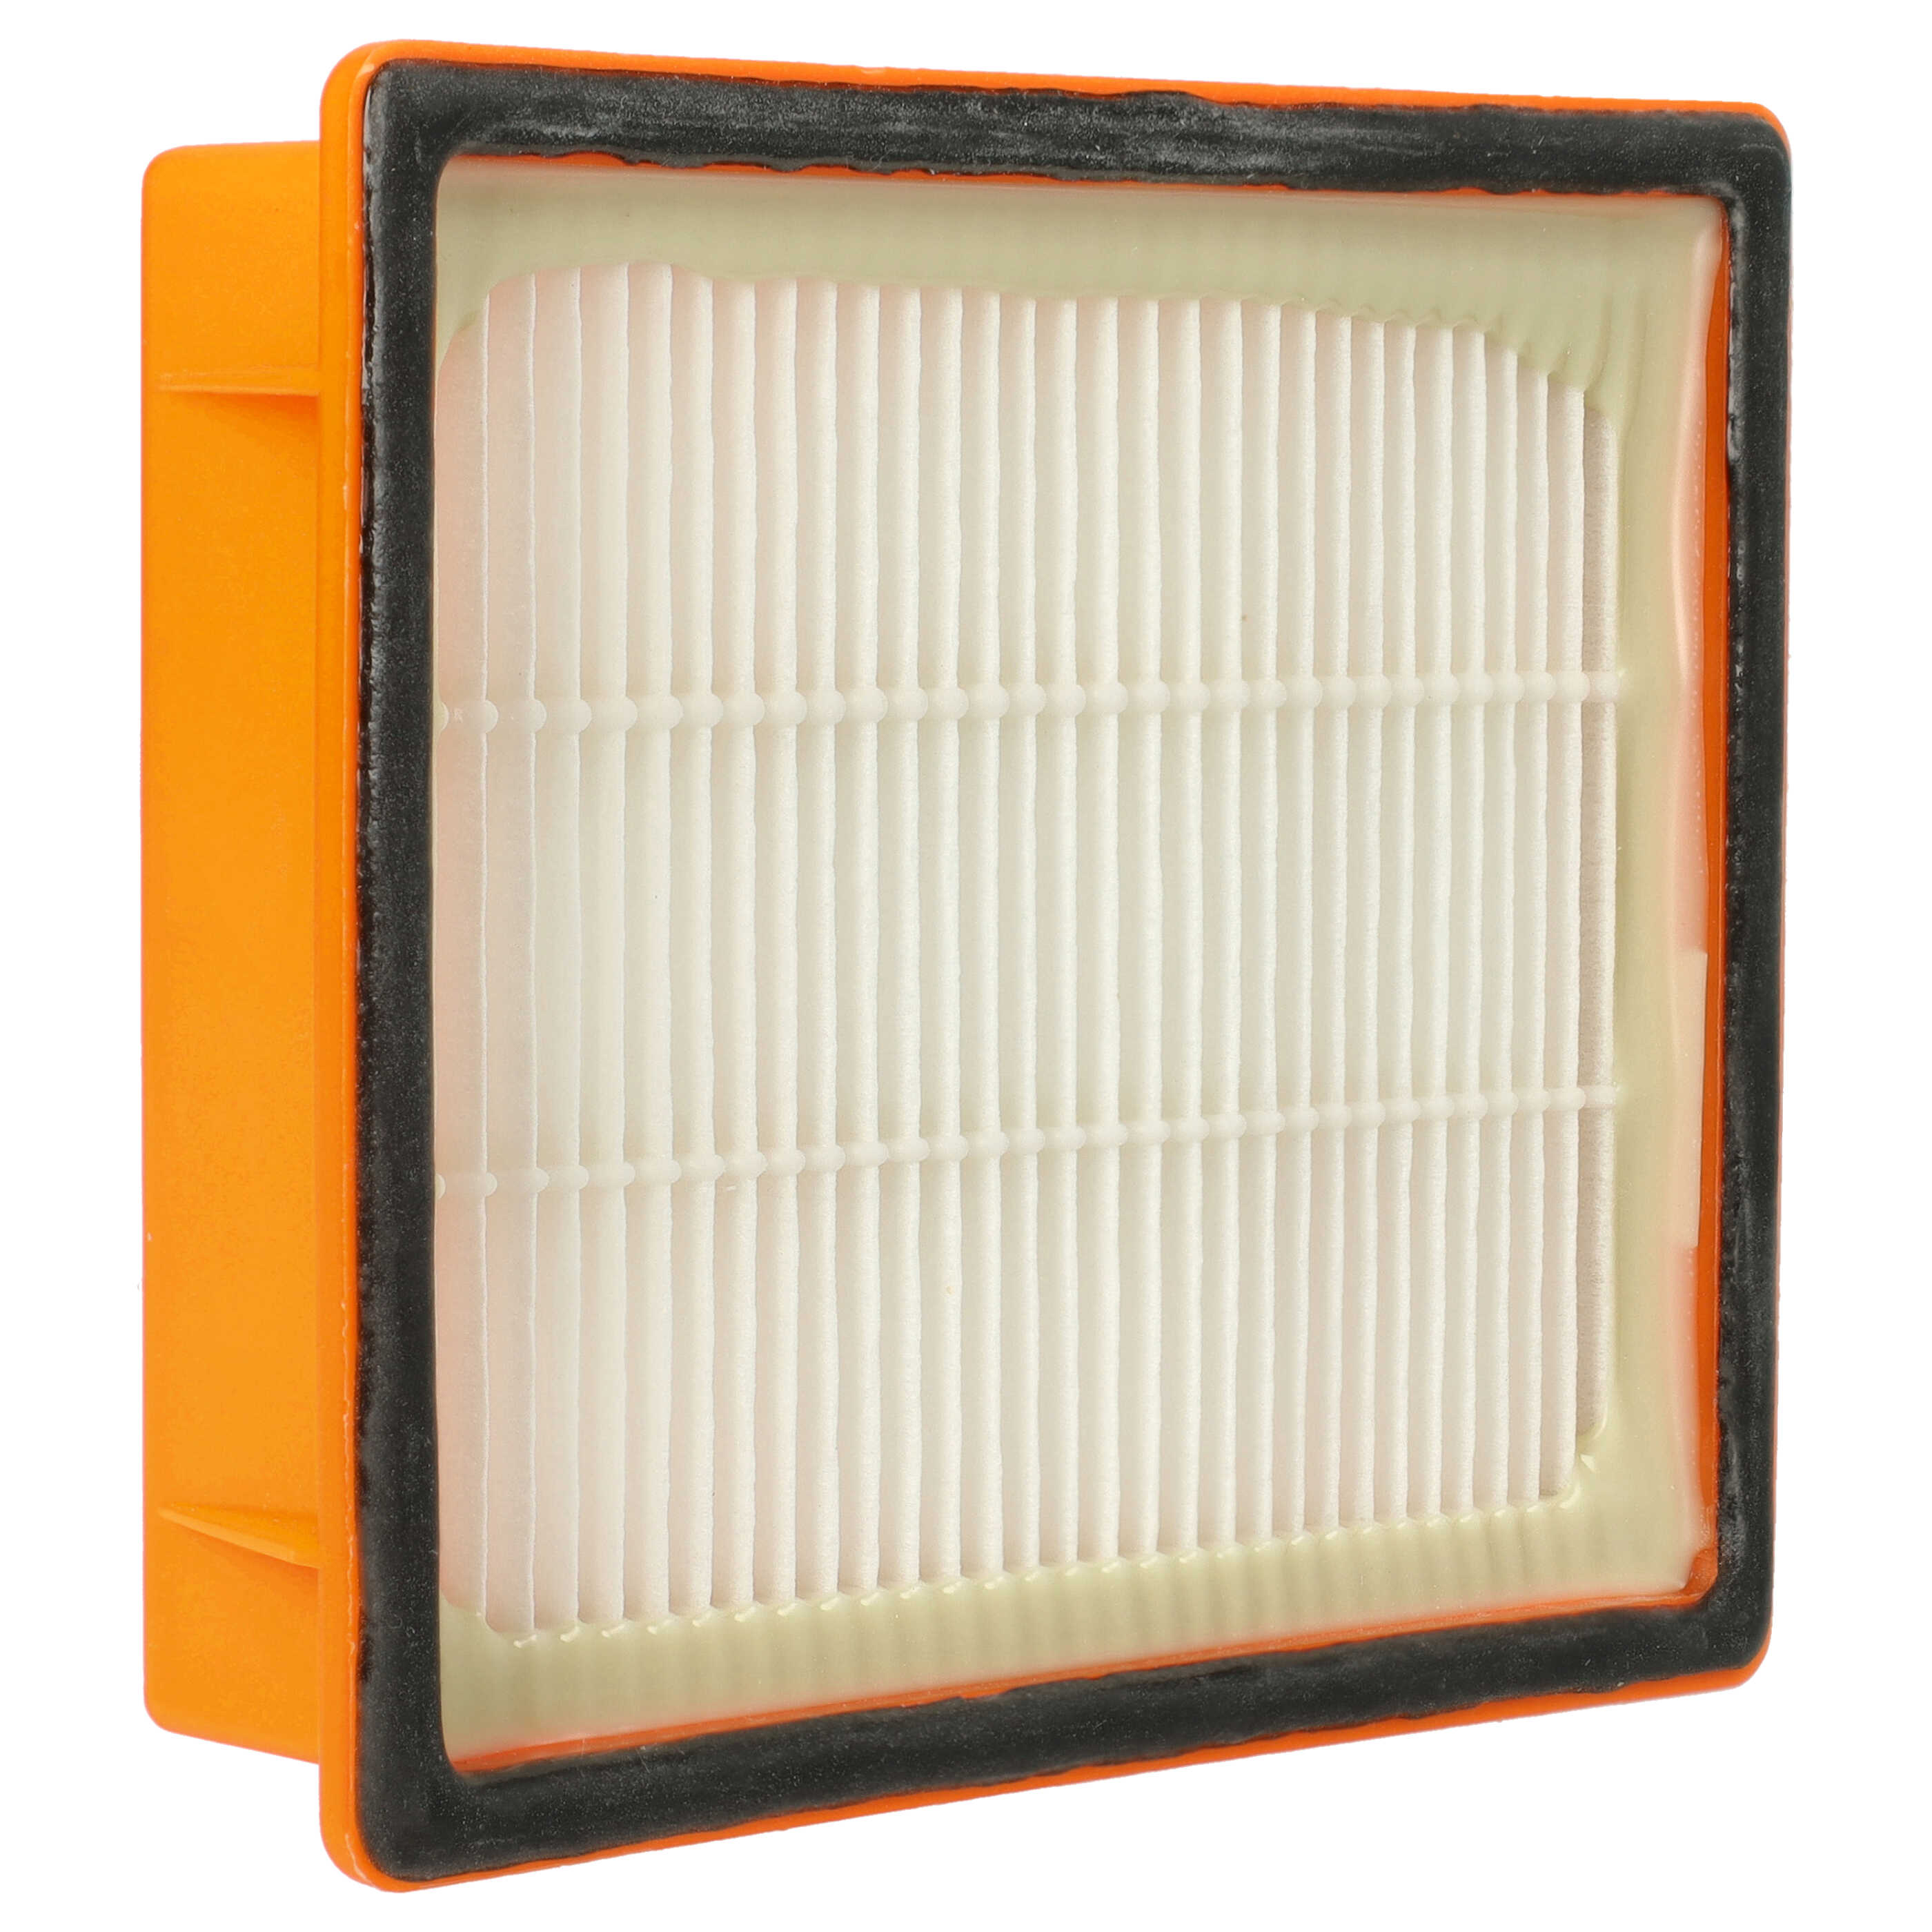 Filtro reemplaza AEG AEF 139 para aspiradora - filtro Hepa naranja / blanco